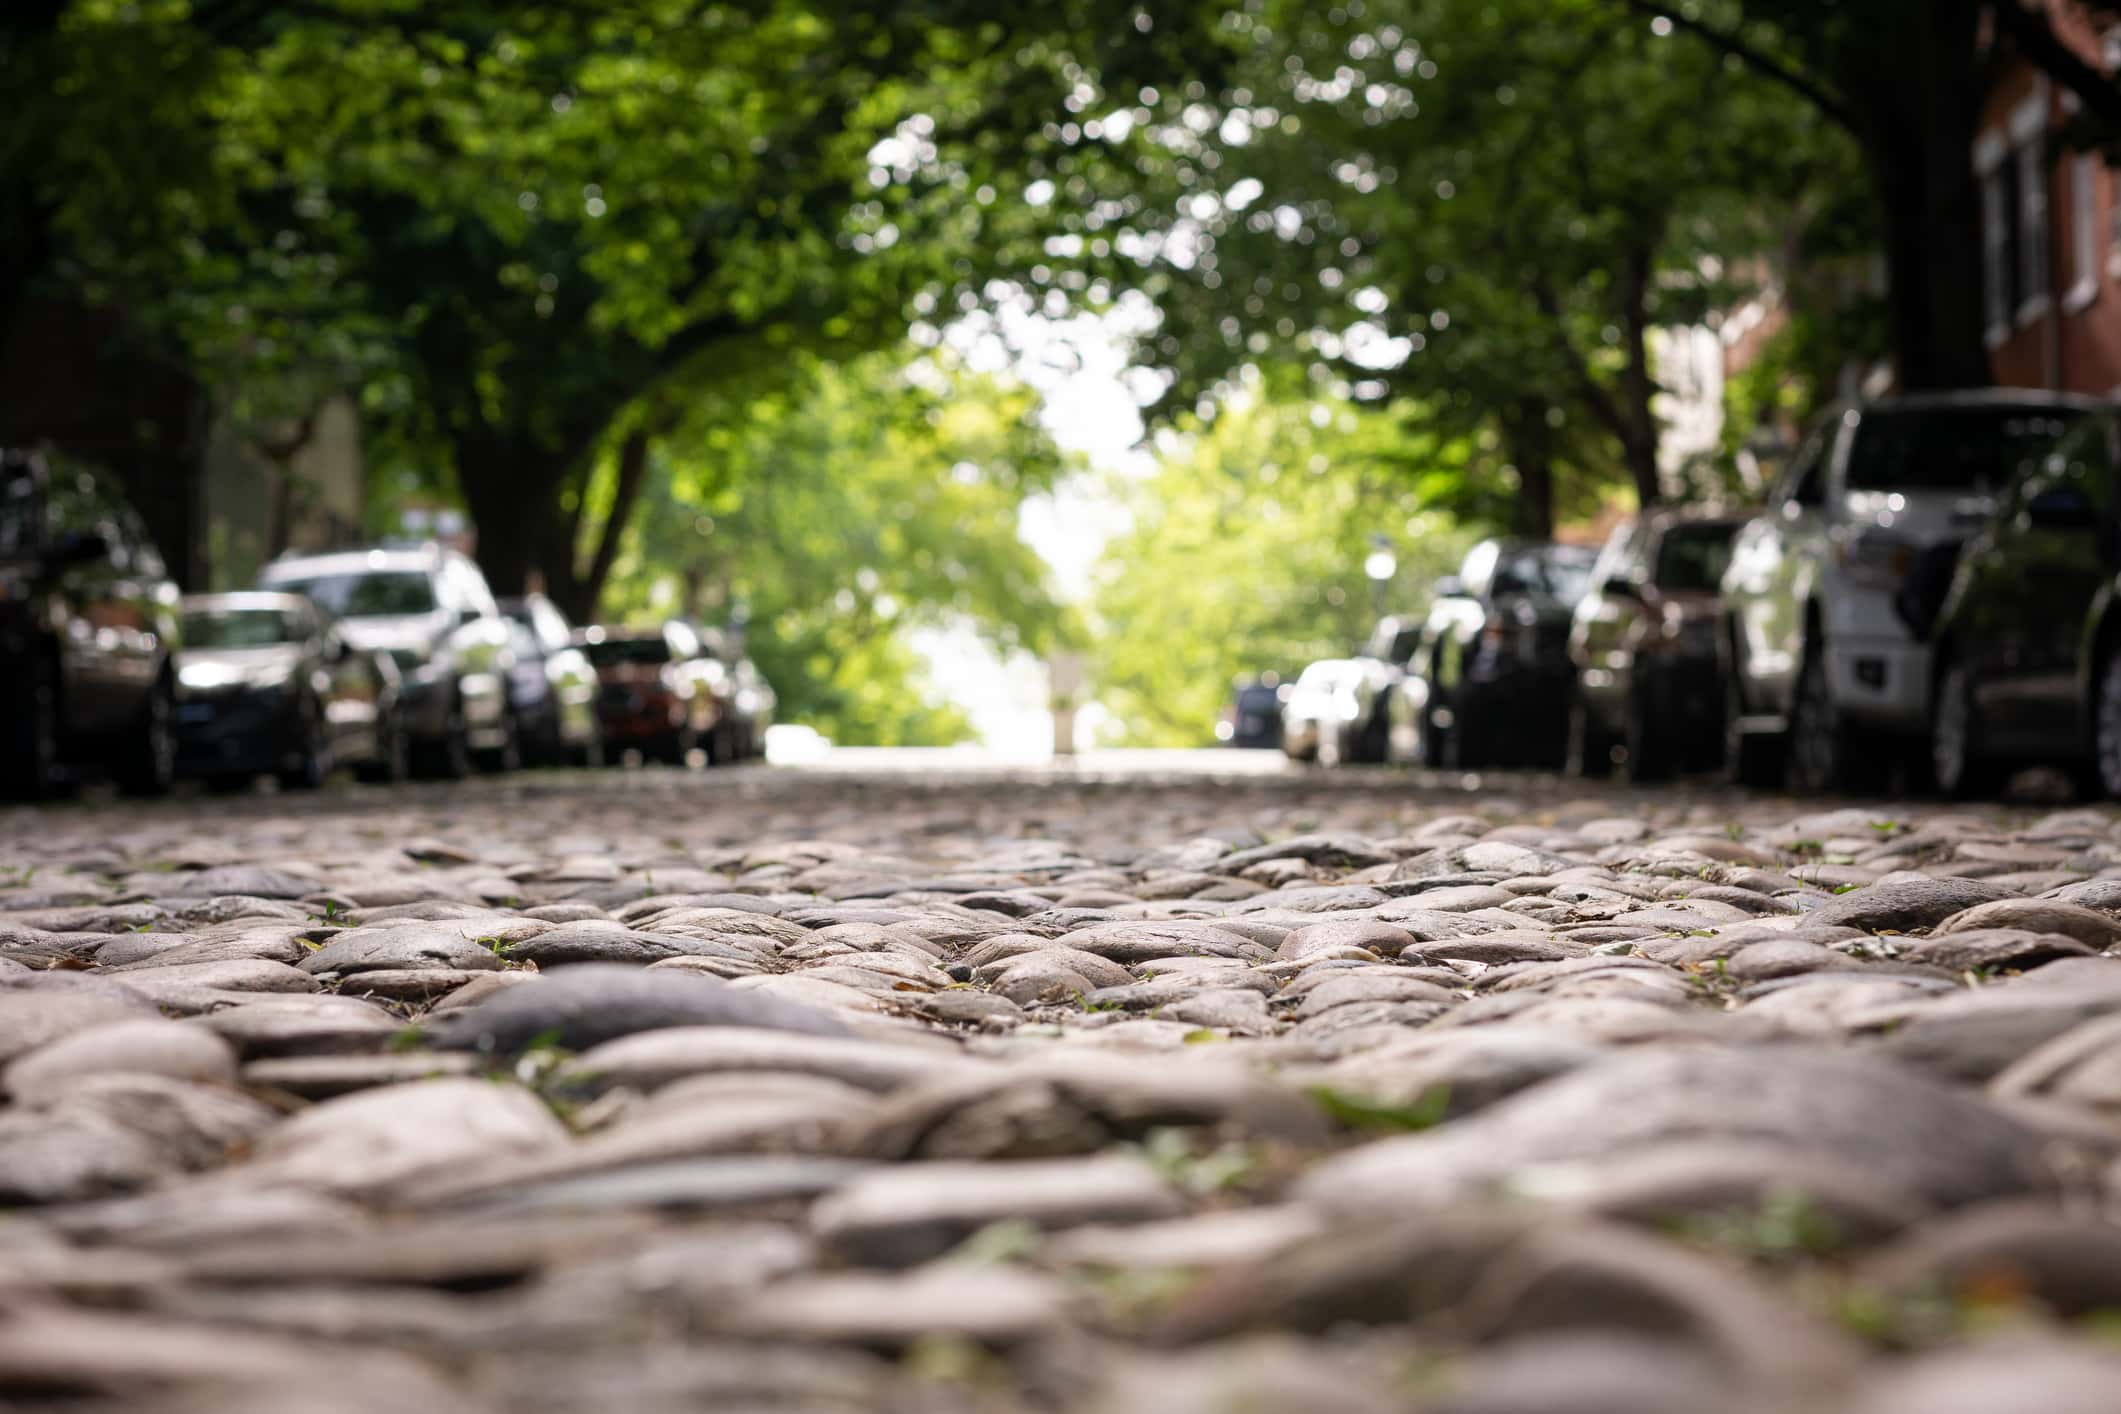 A cobblestone road in old town Alexandria.